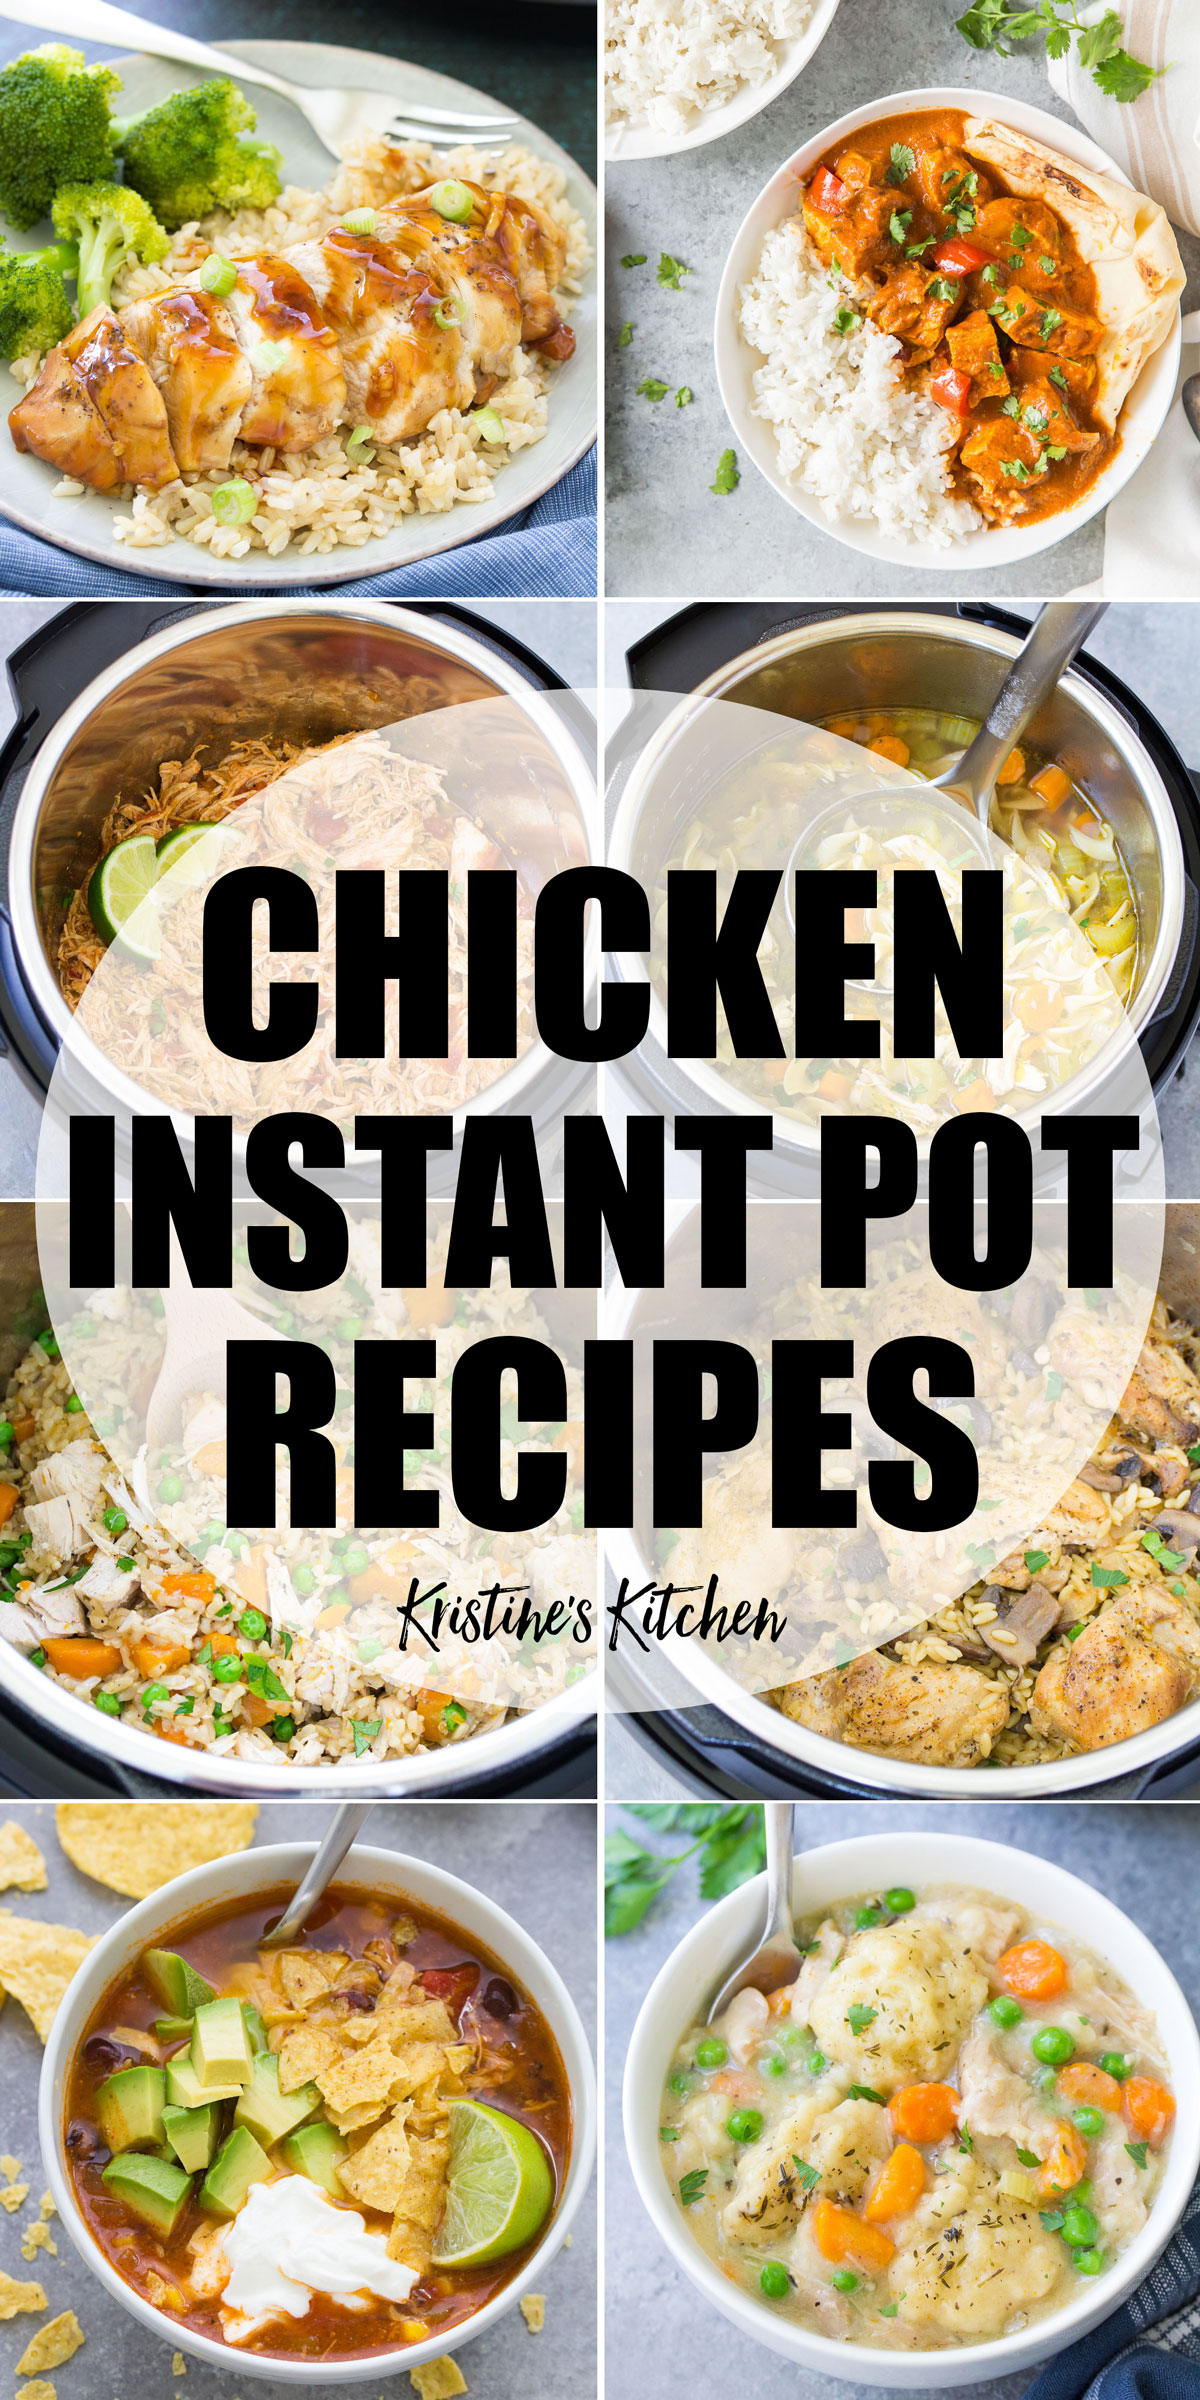 50 Best Instant Pot Recipes To Make for Dinner